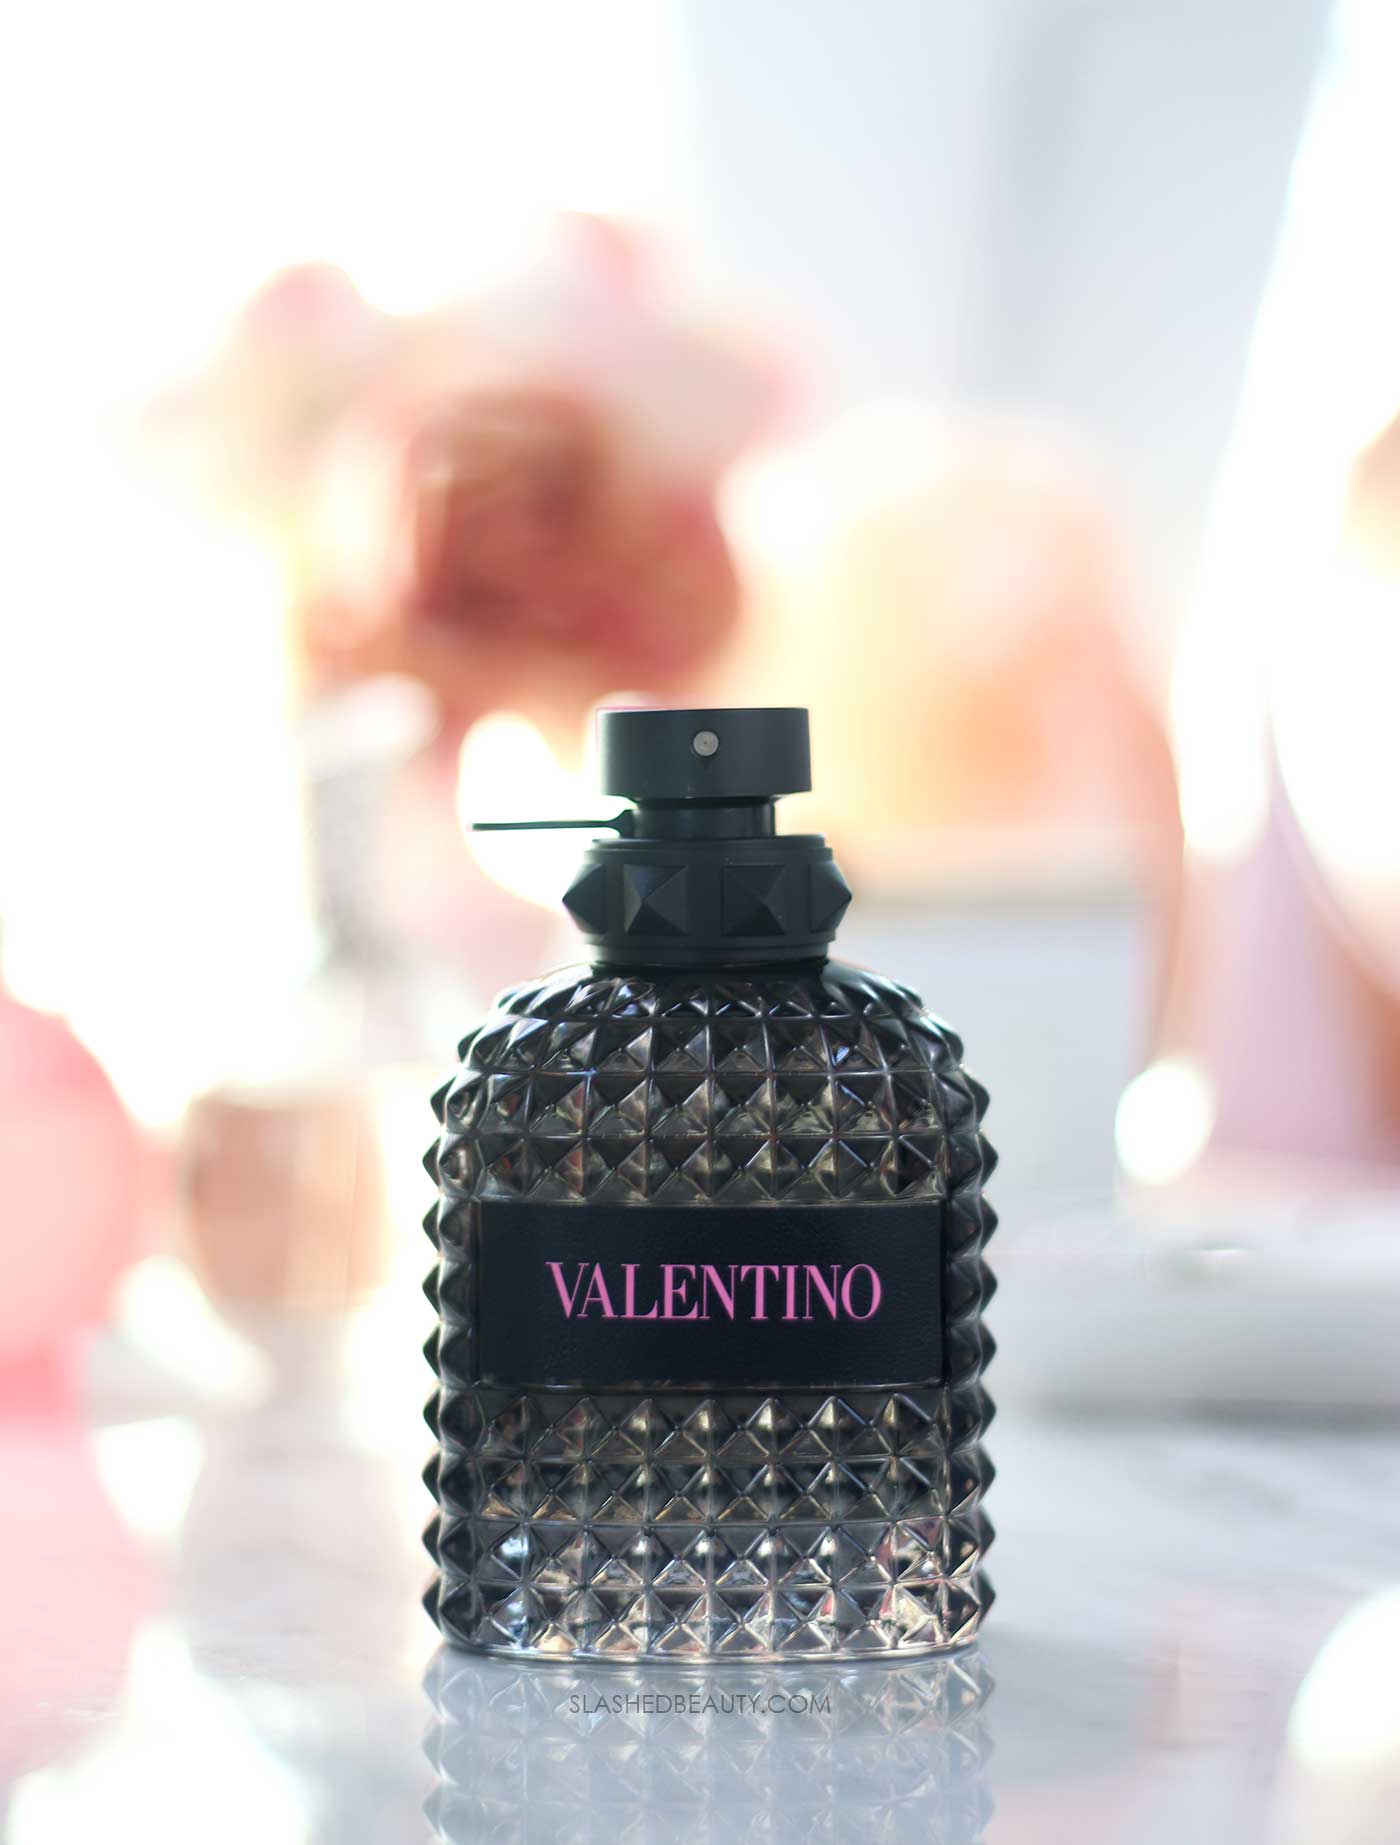 REVIEW: Valentino Uomo in Roma Men's Slashed Beauty